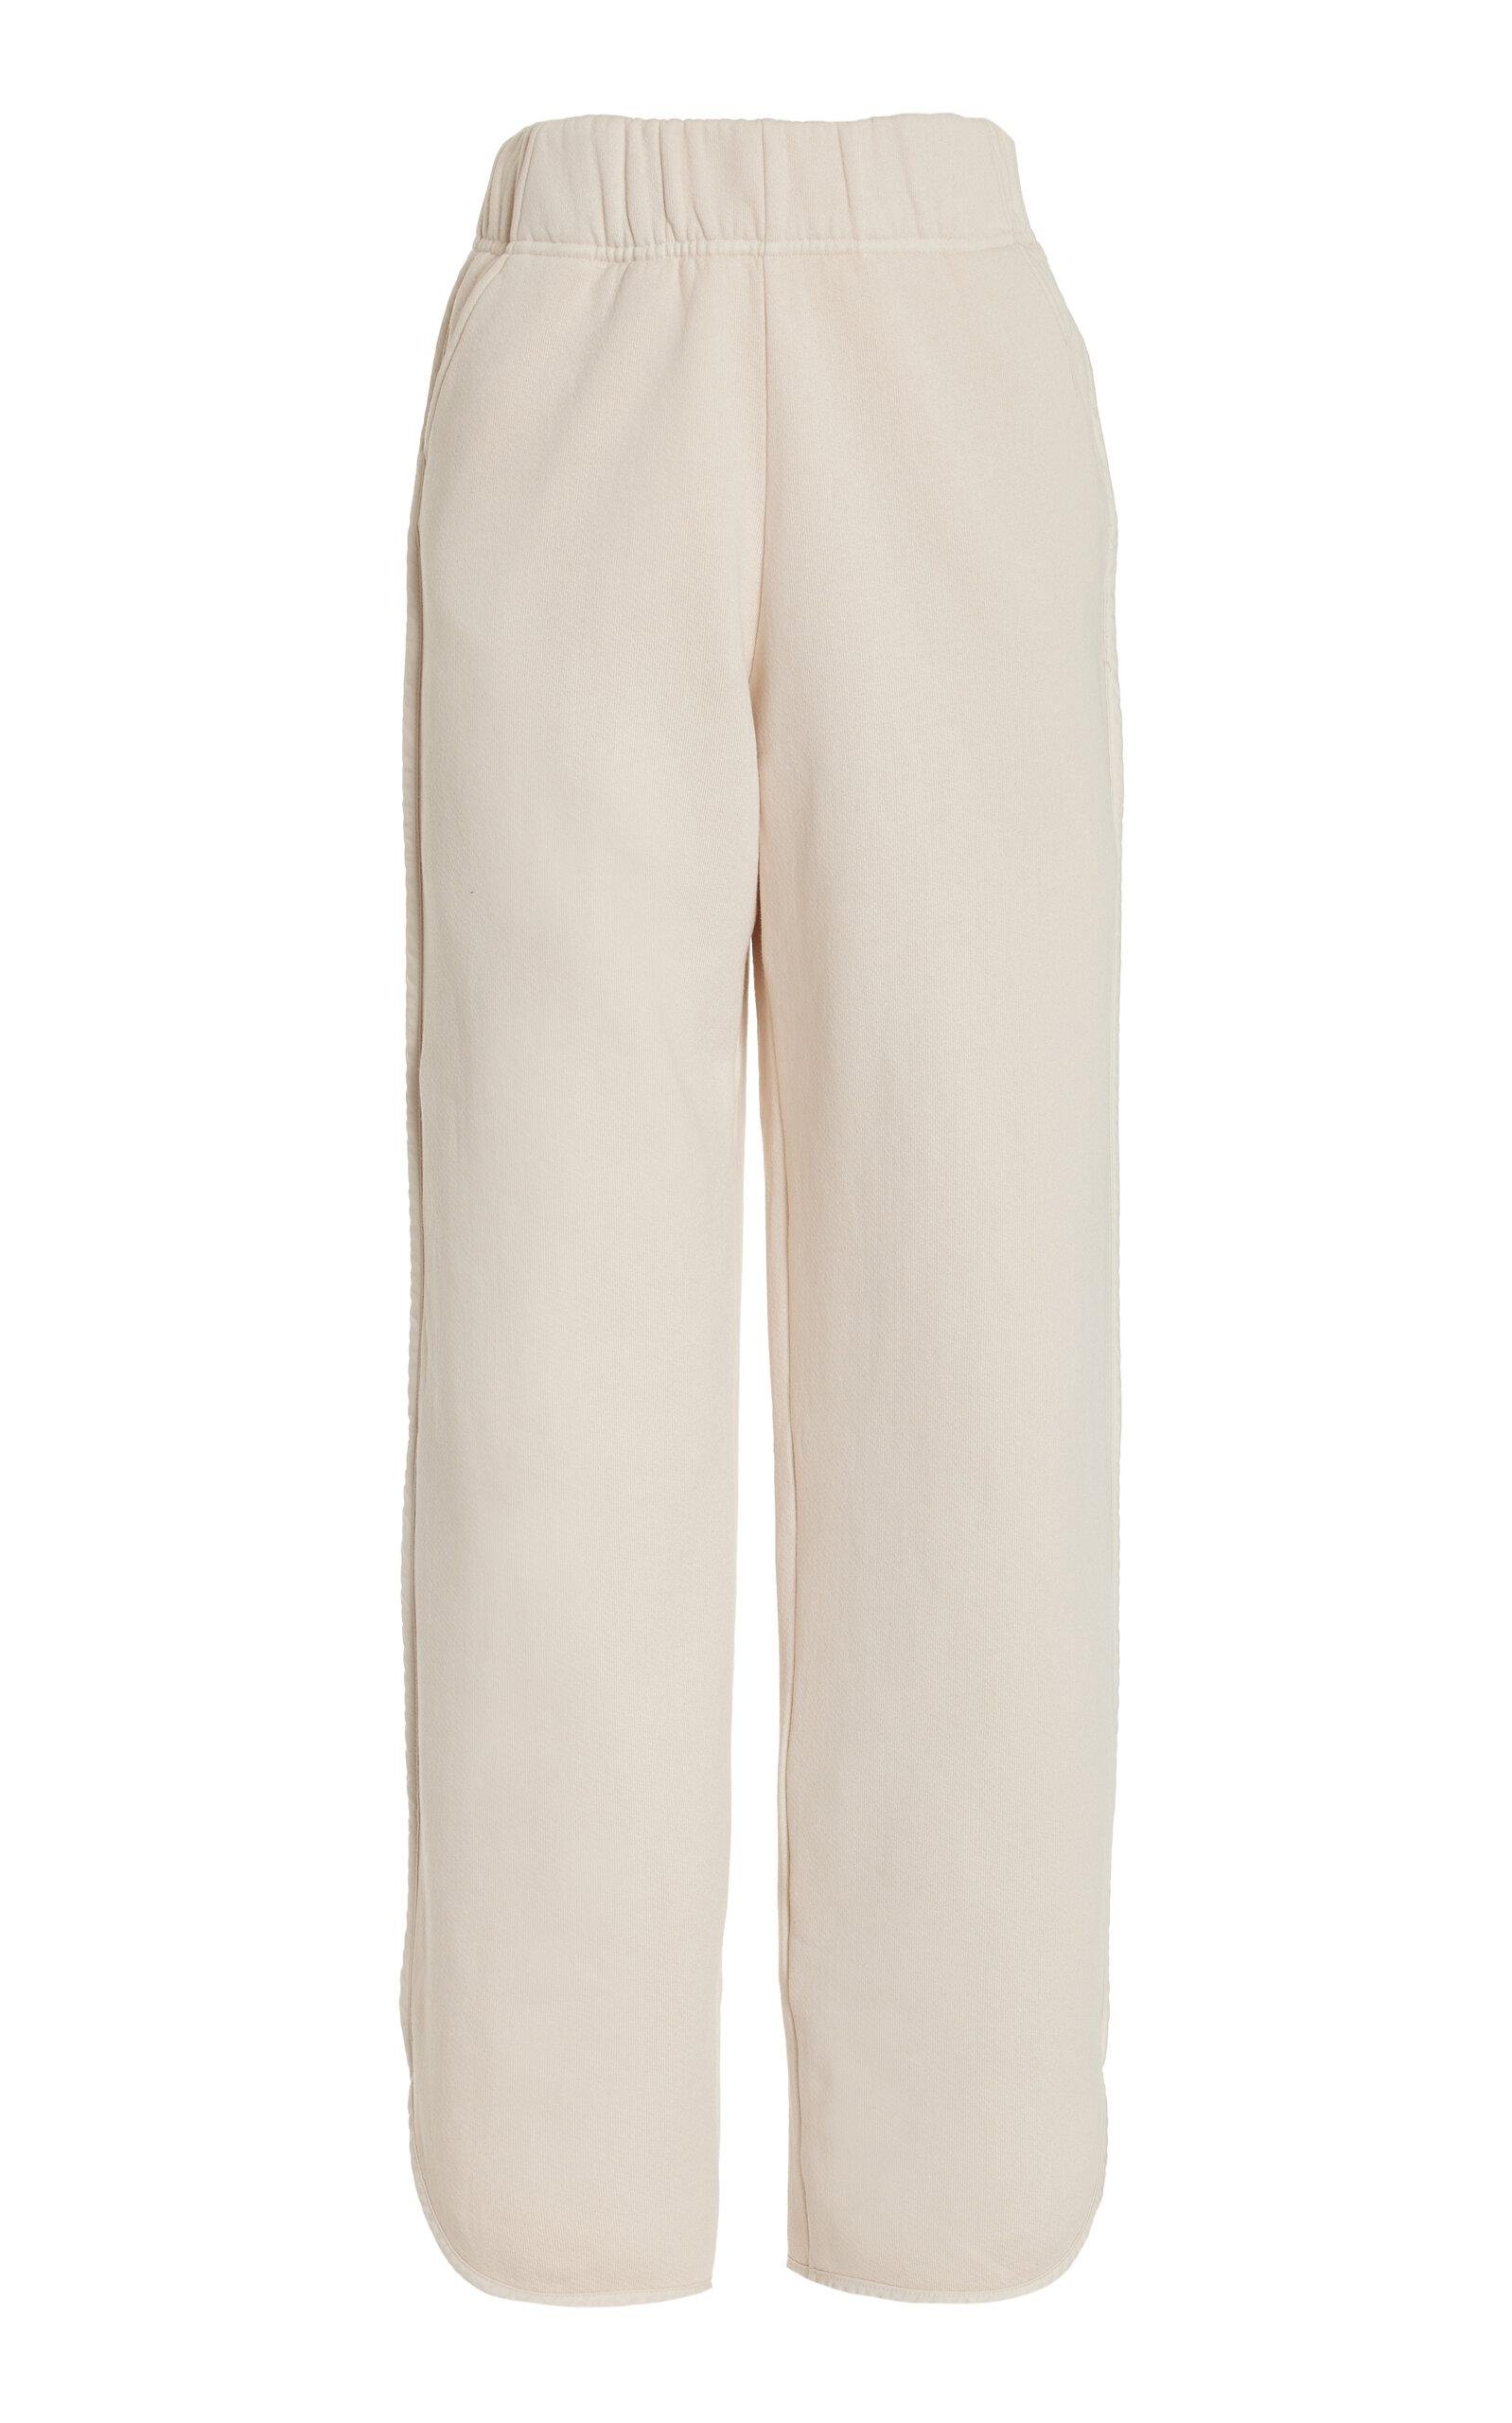 Les Tien - Olympia Cotton Sweatpants - Ivory - S - Moda Operandi by LES TIEN